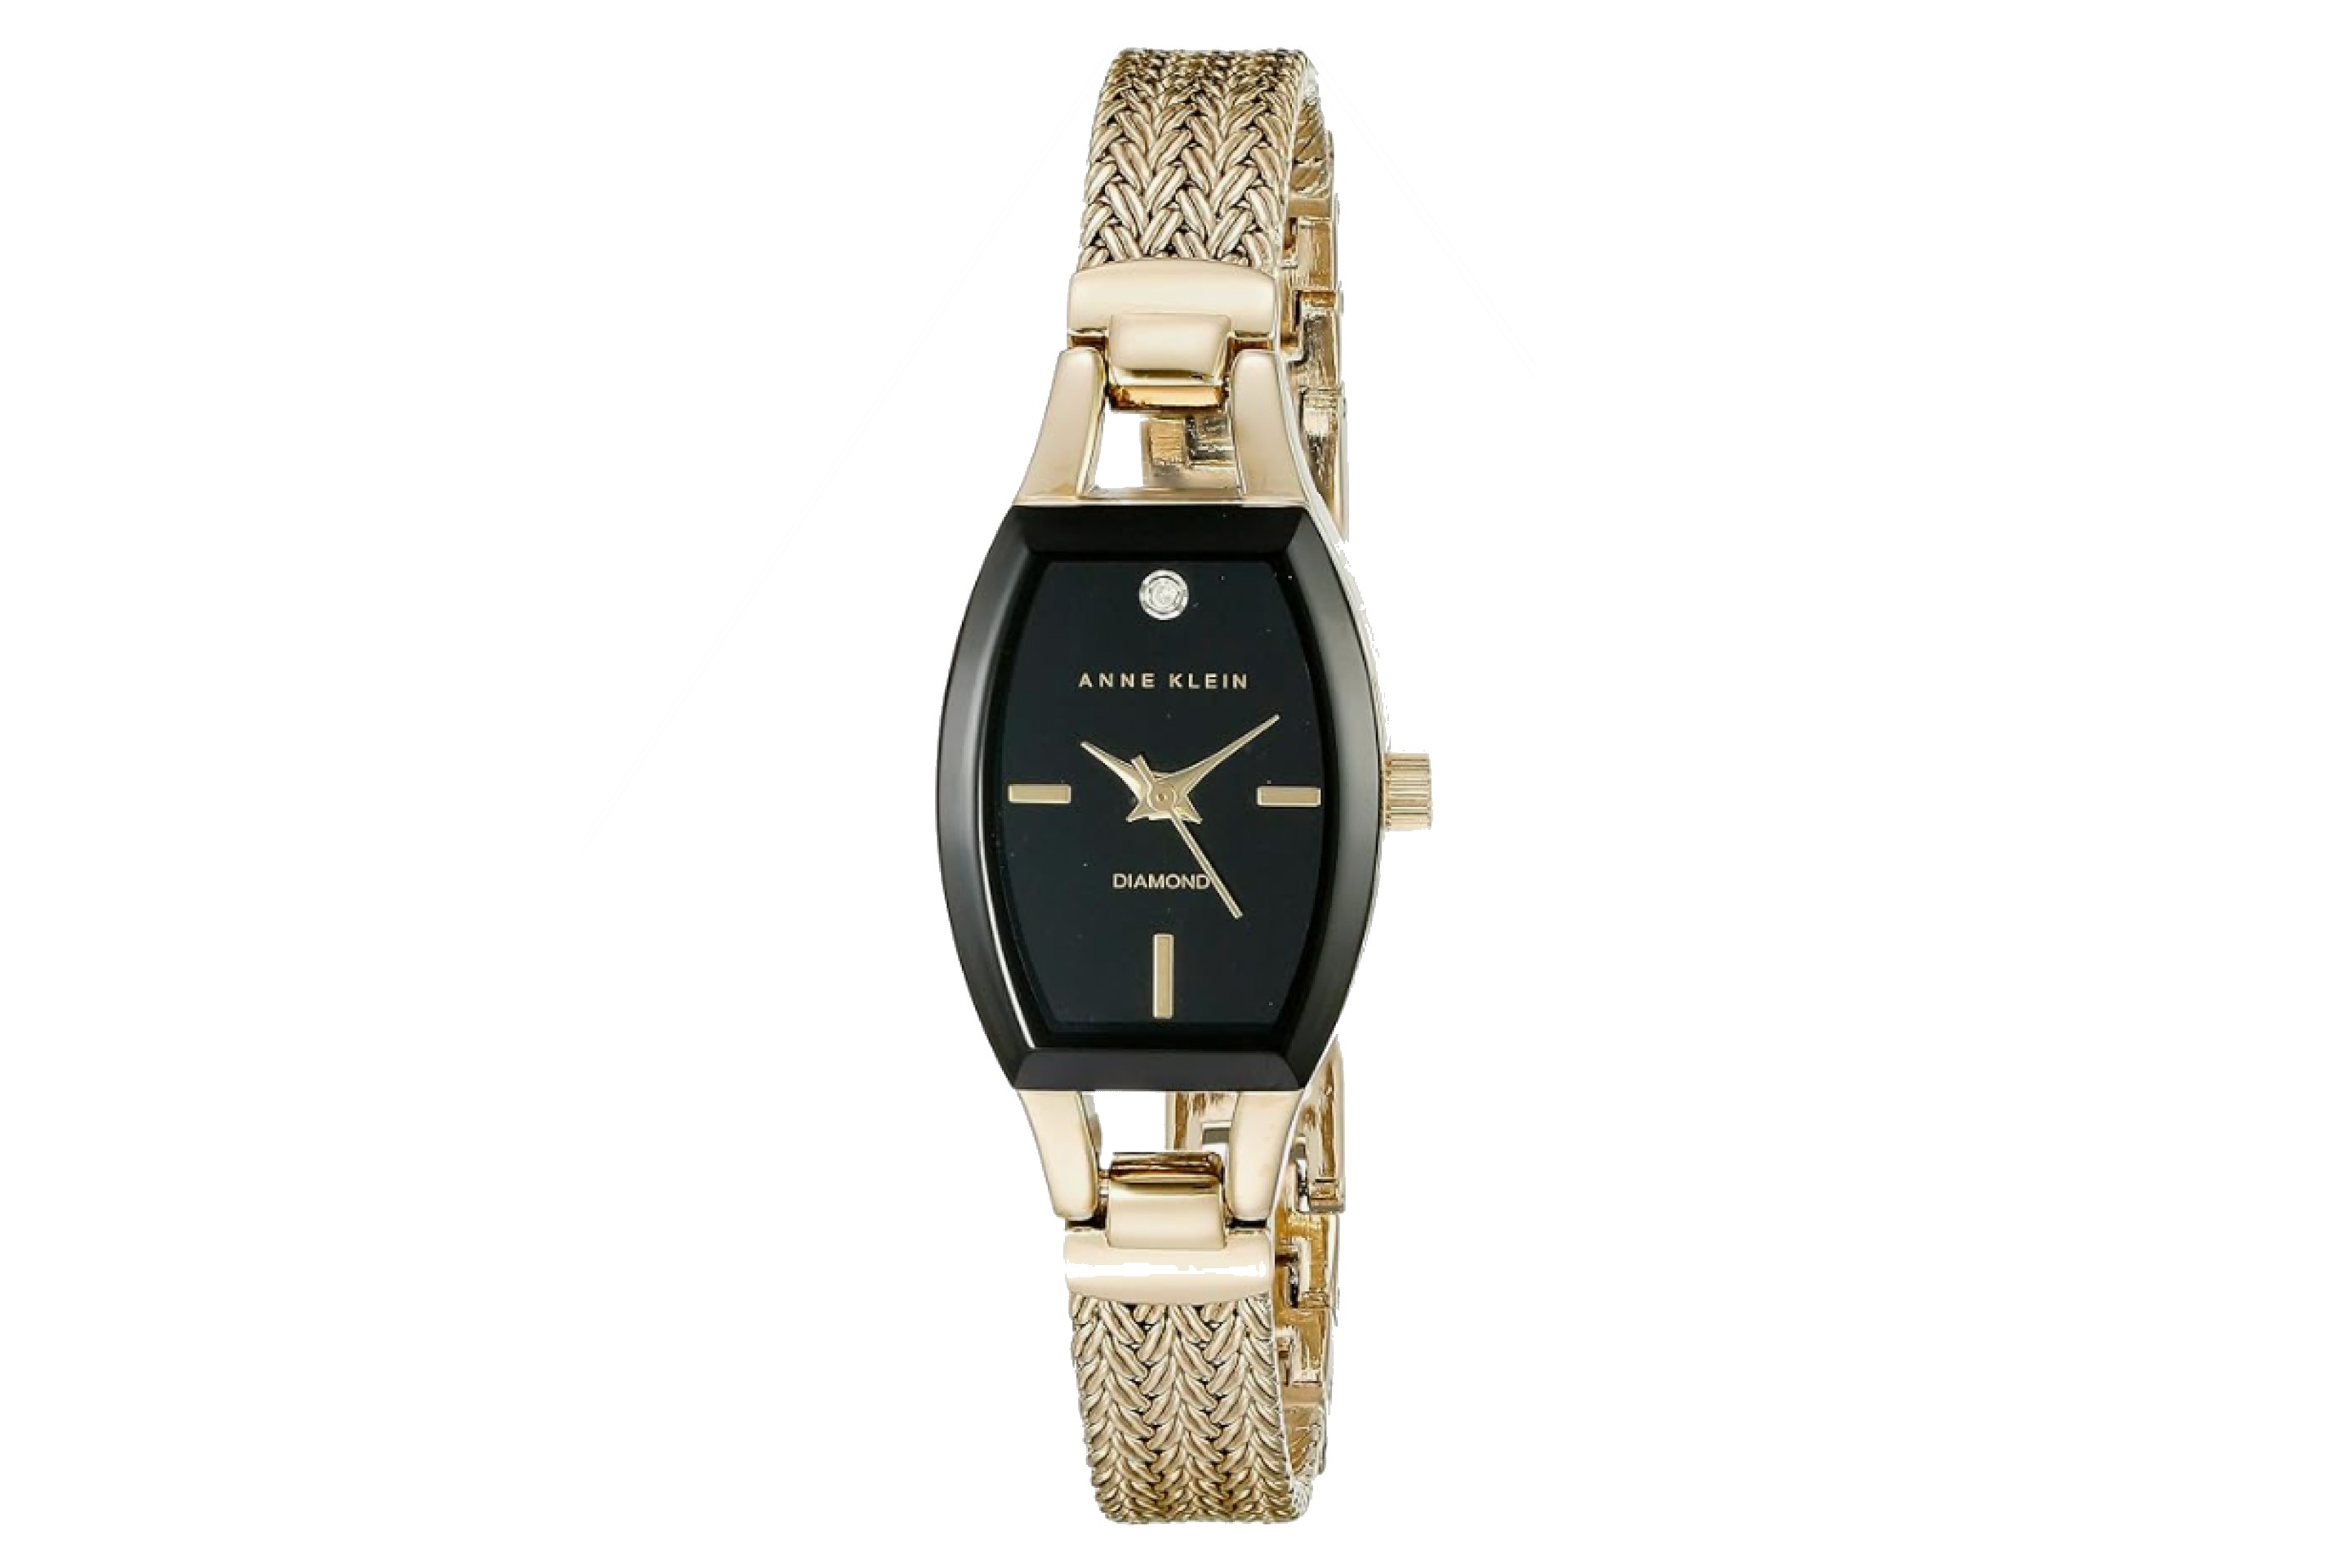 Anne Klein Diamond Bracelet Watch